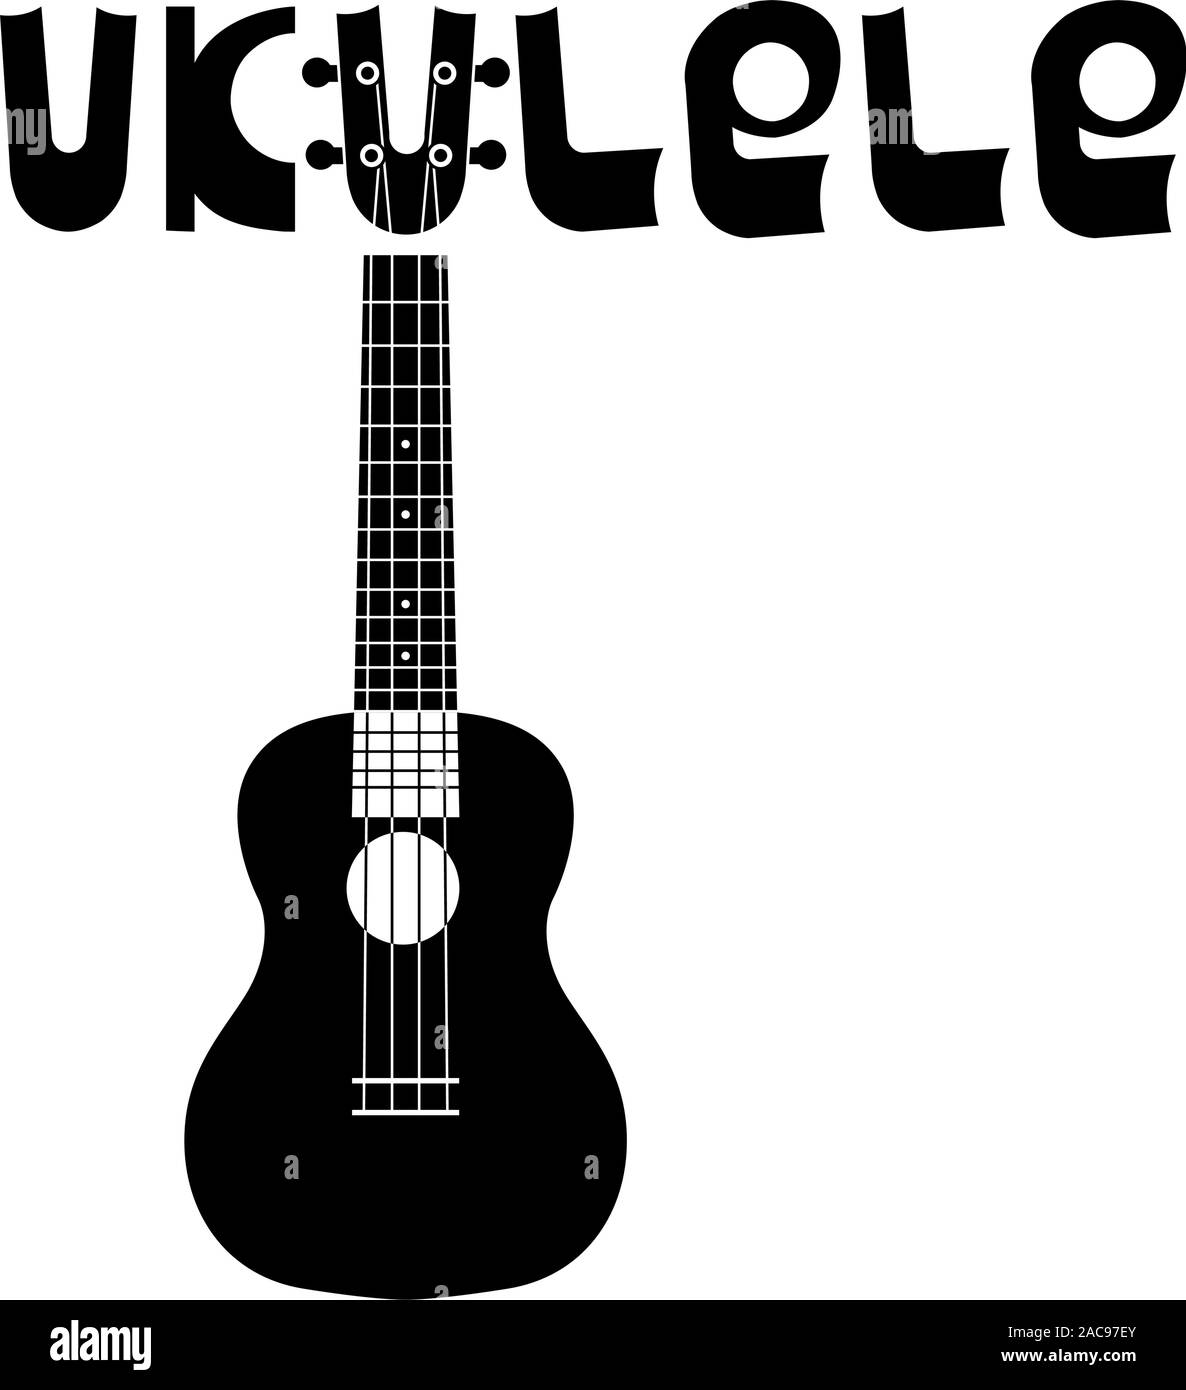 Ukulele Hawaiian guitar. Lettering of the word ukulele. String musical instrument. Simple vector illustration Stock Vector